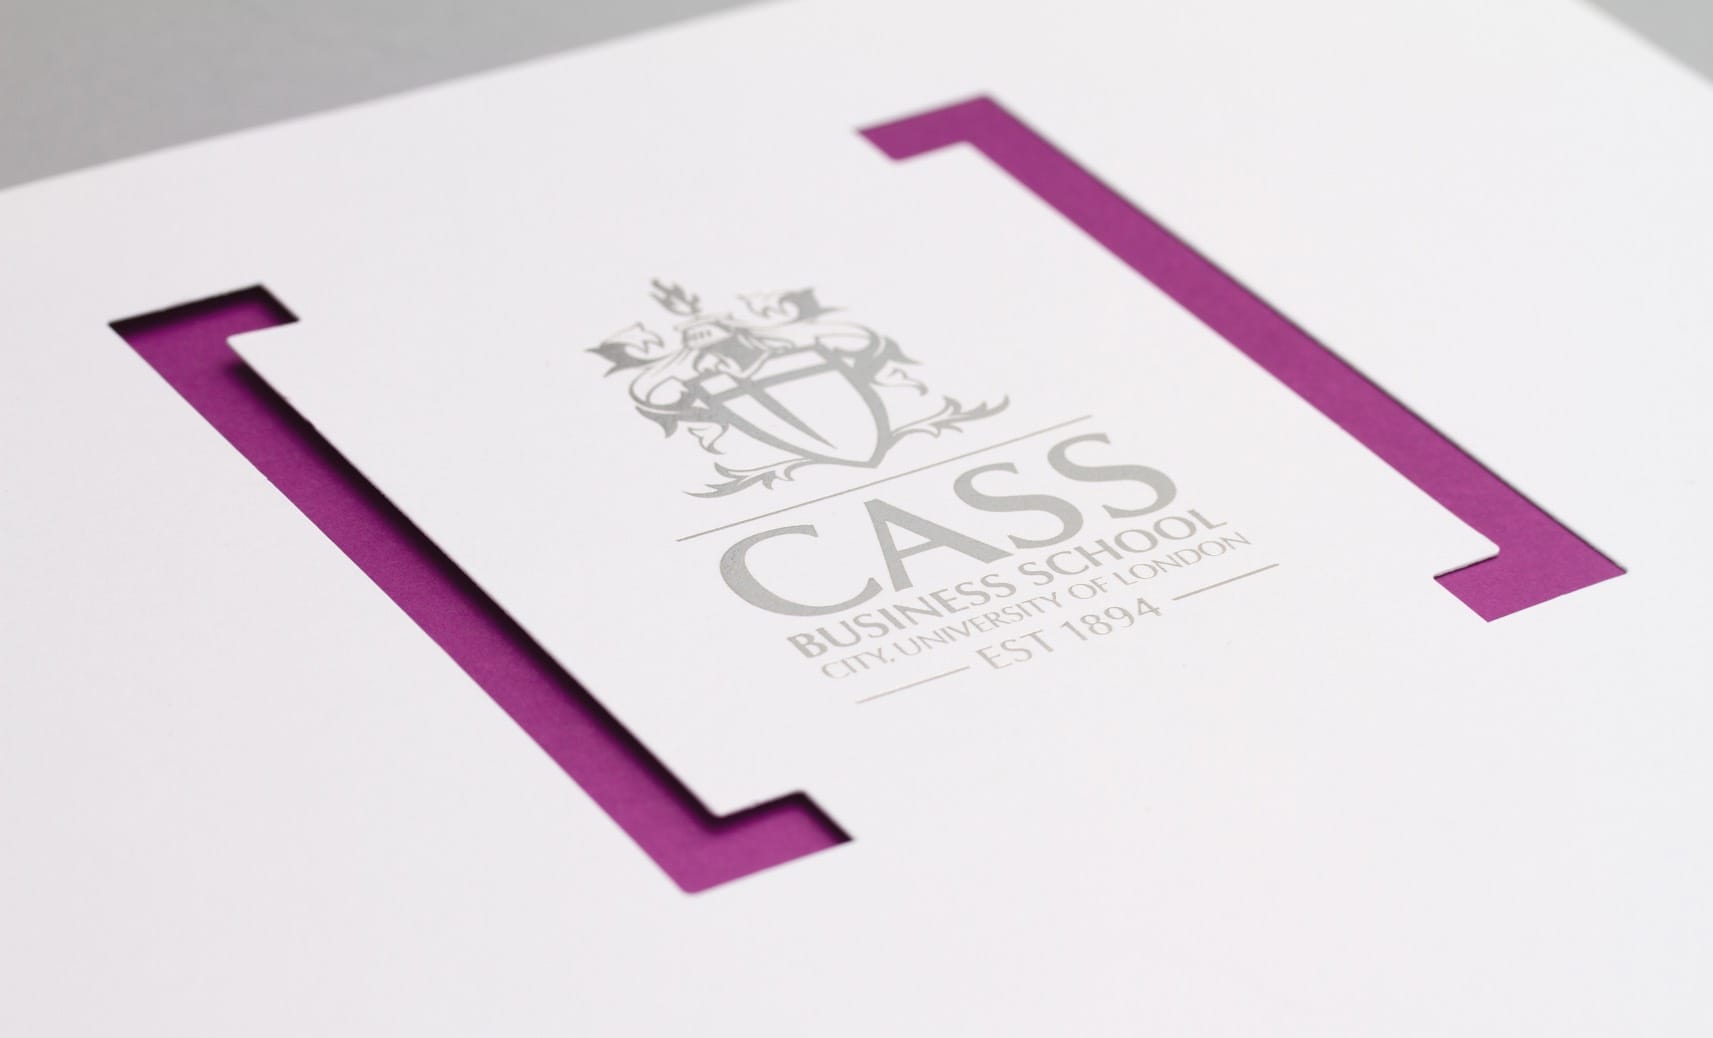 Cass Business School brochure cover close up